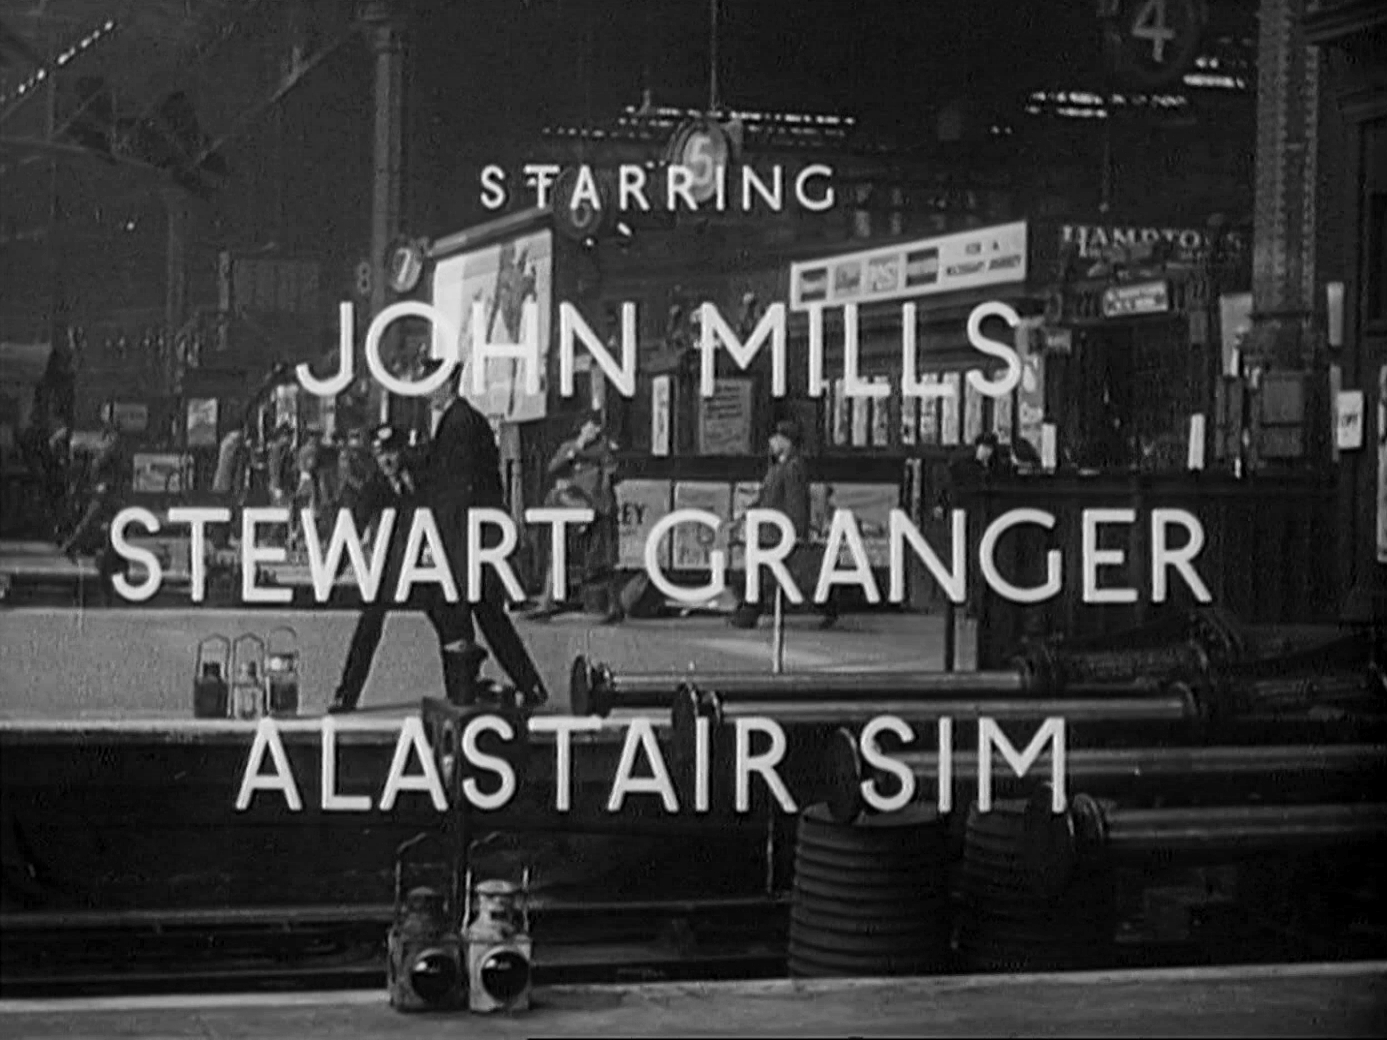 Main title from Waterloo Road (1945) (5). Starring John Mills, Stewart Granger, Alastair Sim